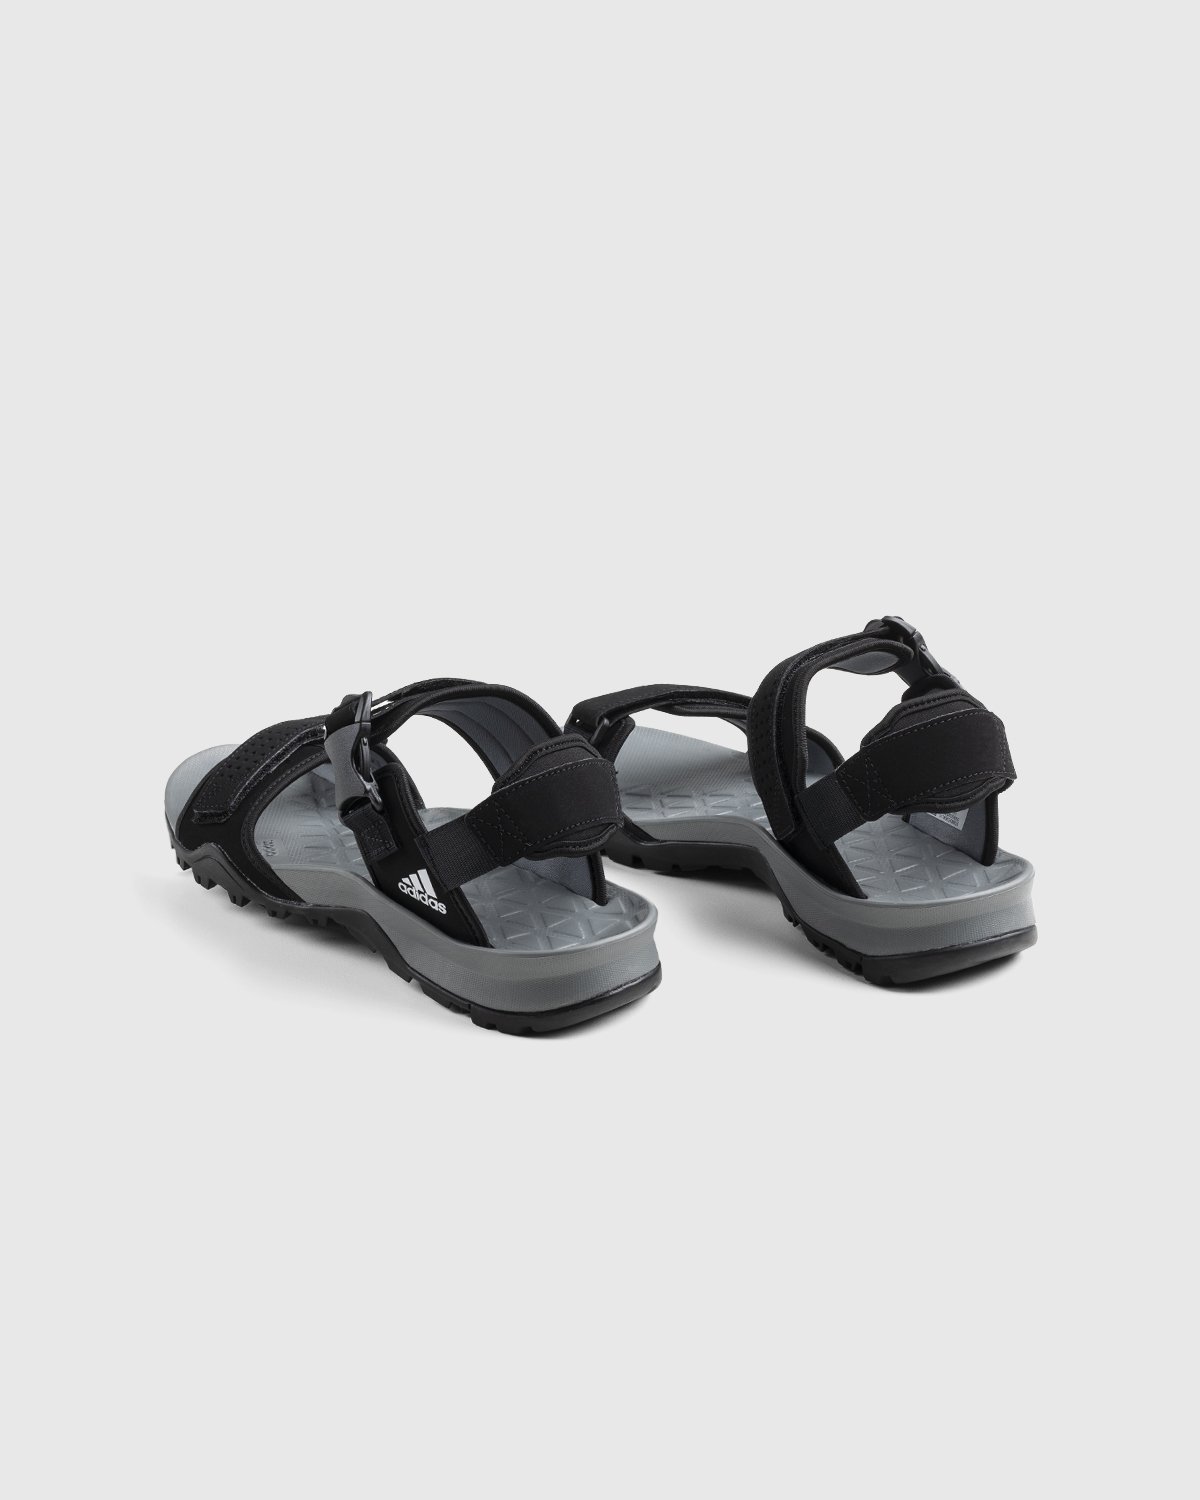 Adidas - Cyprex Ultra II Sandals Core Black Vista Grey Cloud White - Footwear - Black - Image 4